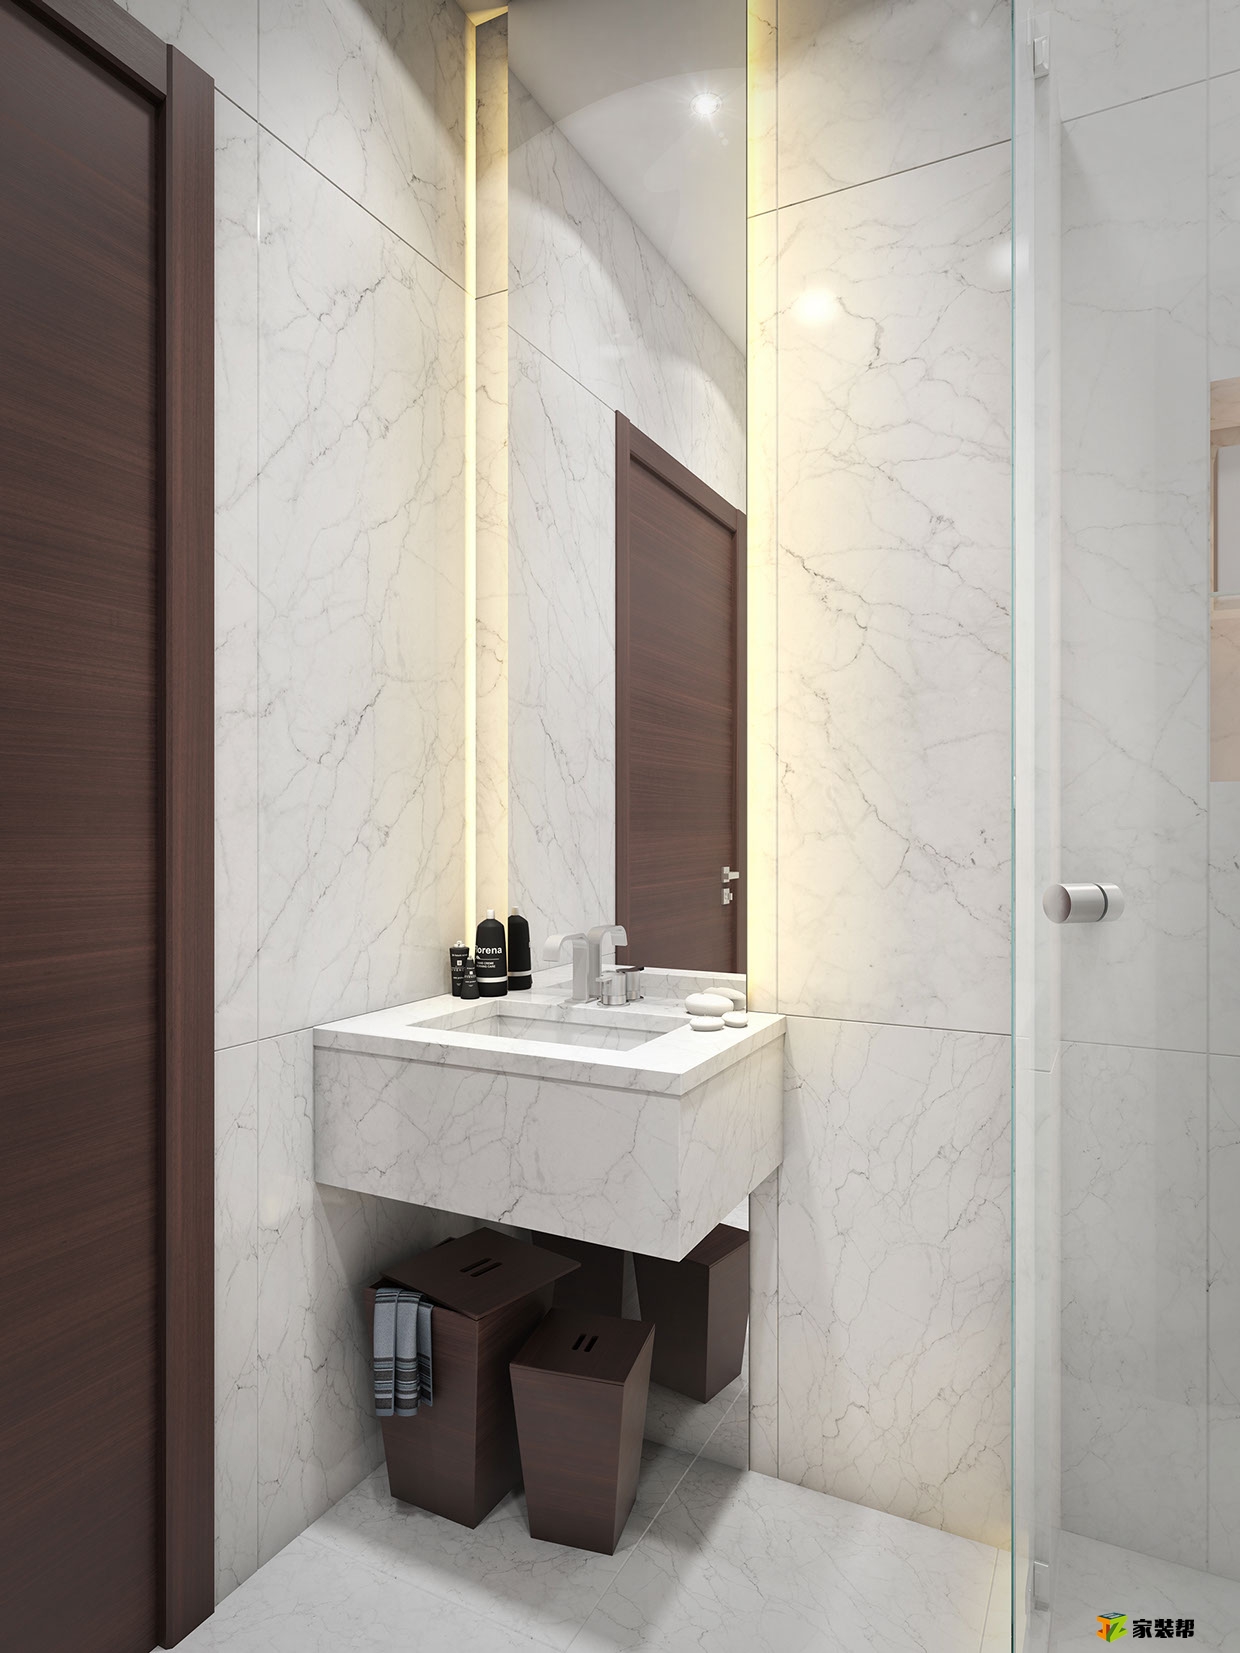 4-marble-bathroom